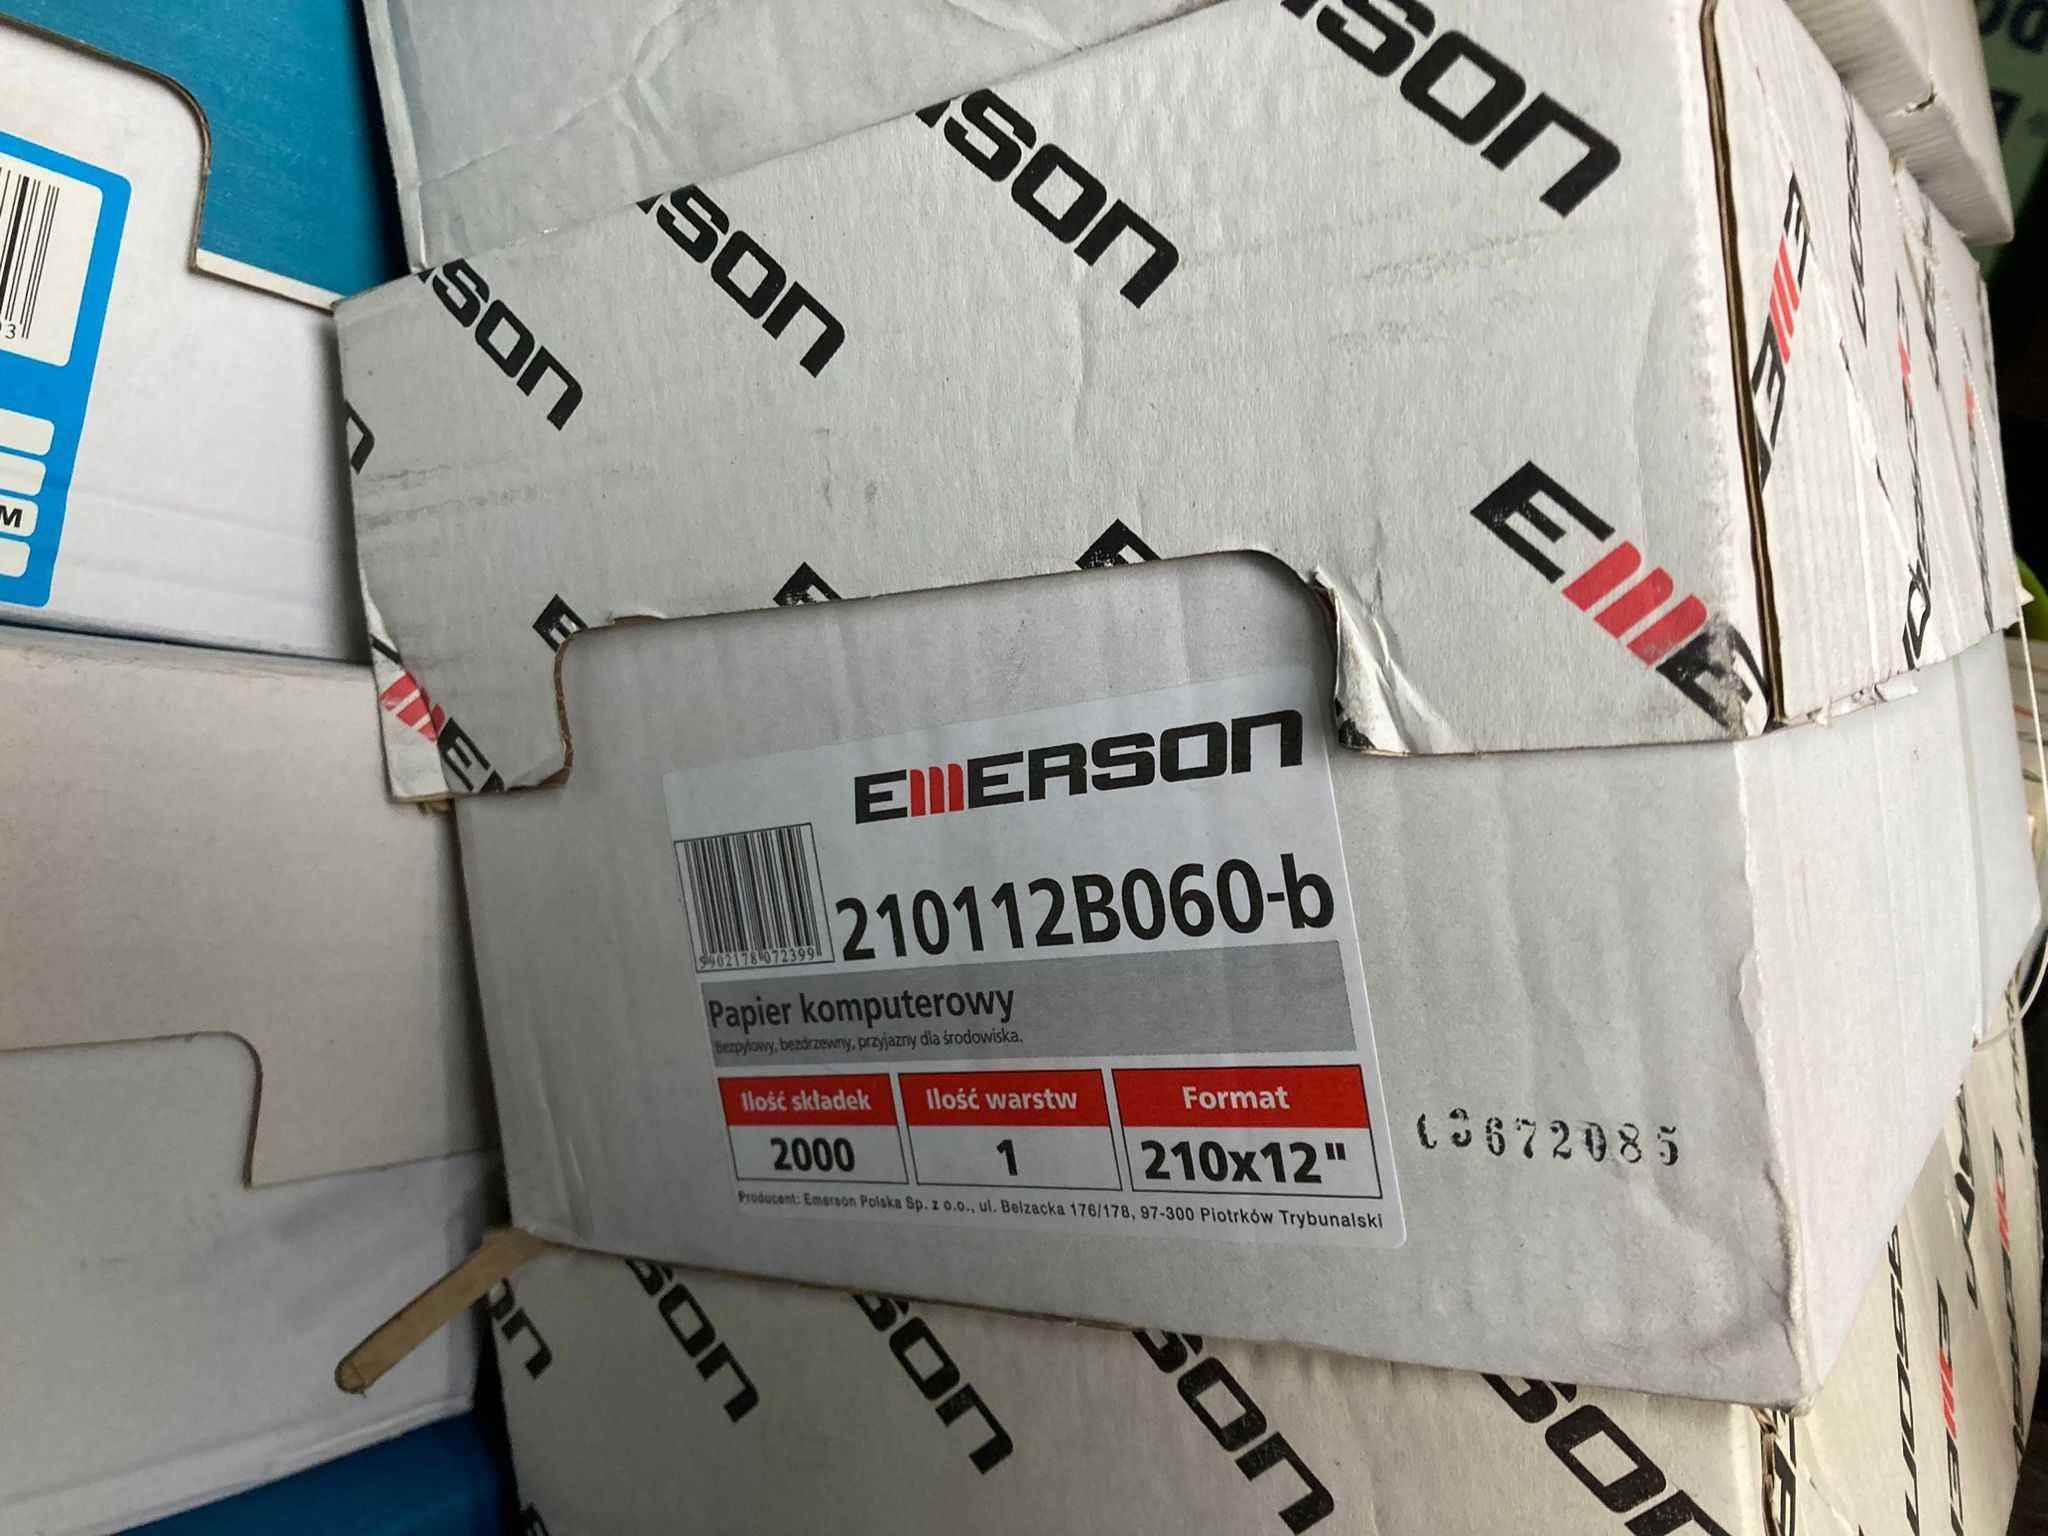 Papier komputerowy Emerson  210x12x1 B 
 210112B060